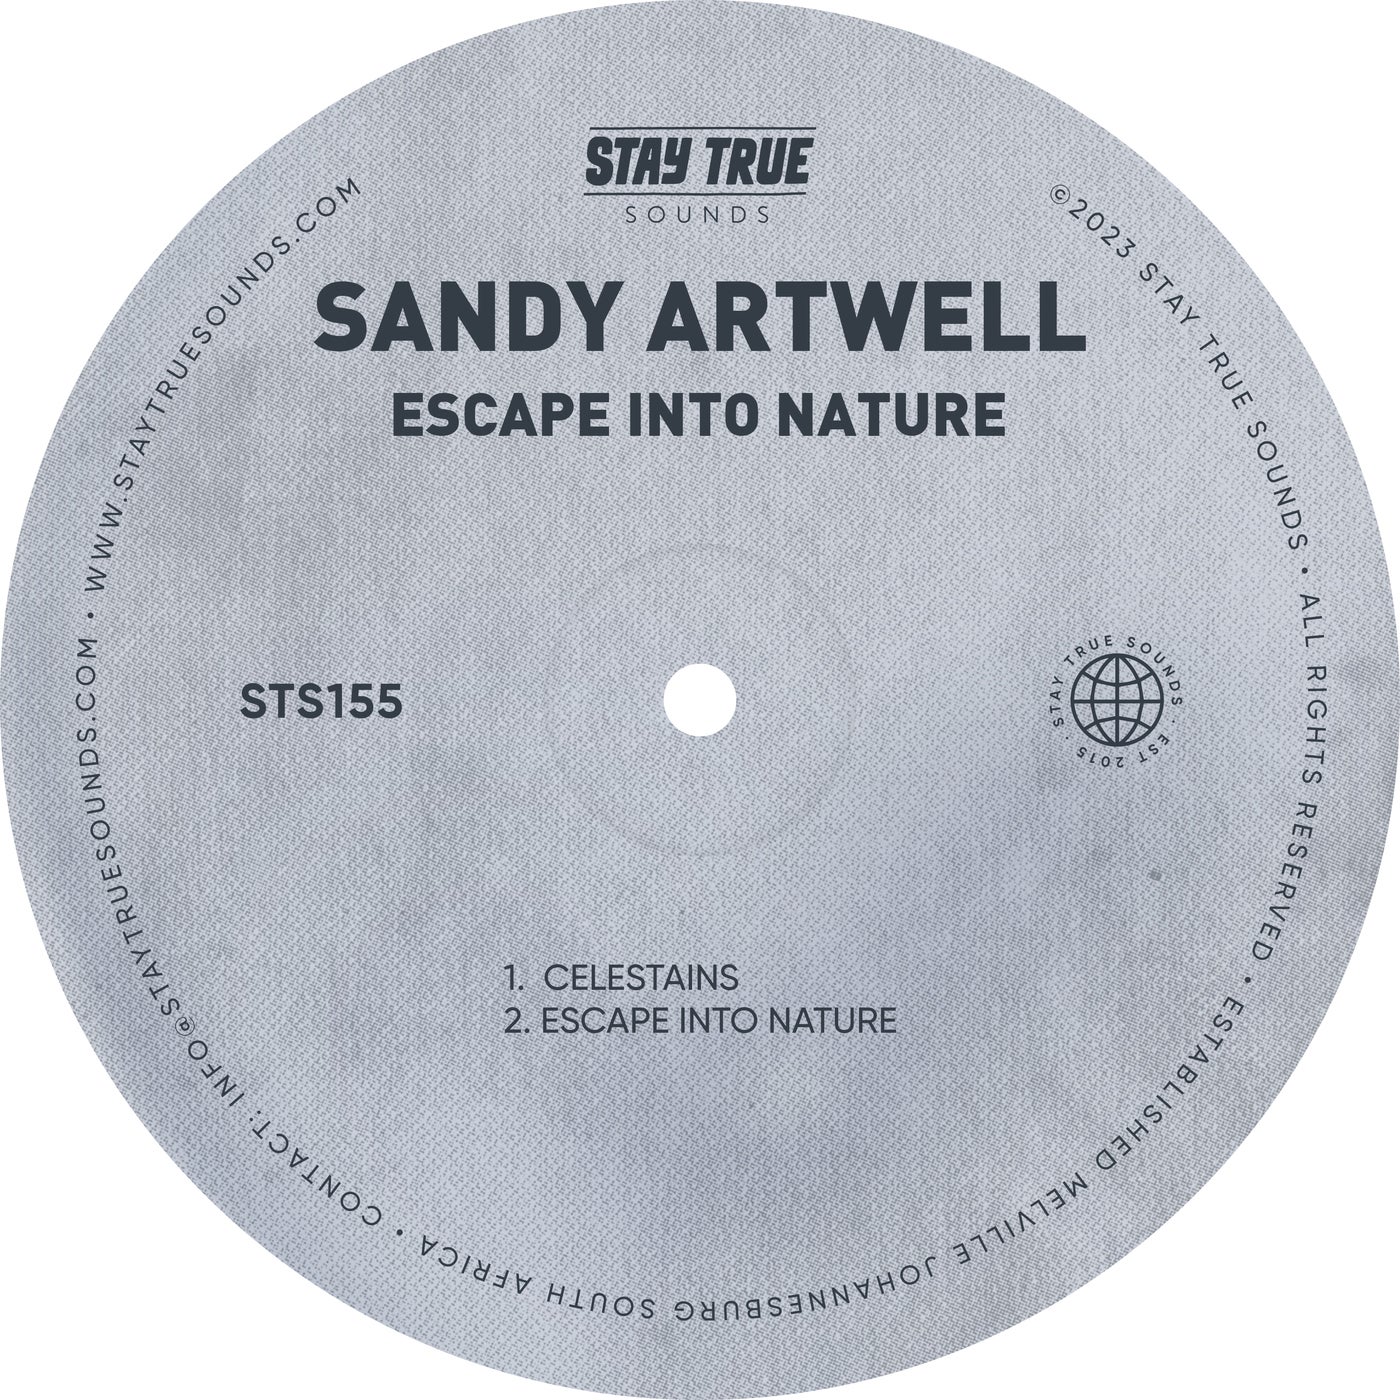 Sandy Artwell - Escape into Nature [Stay True Sounds]